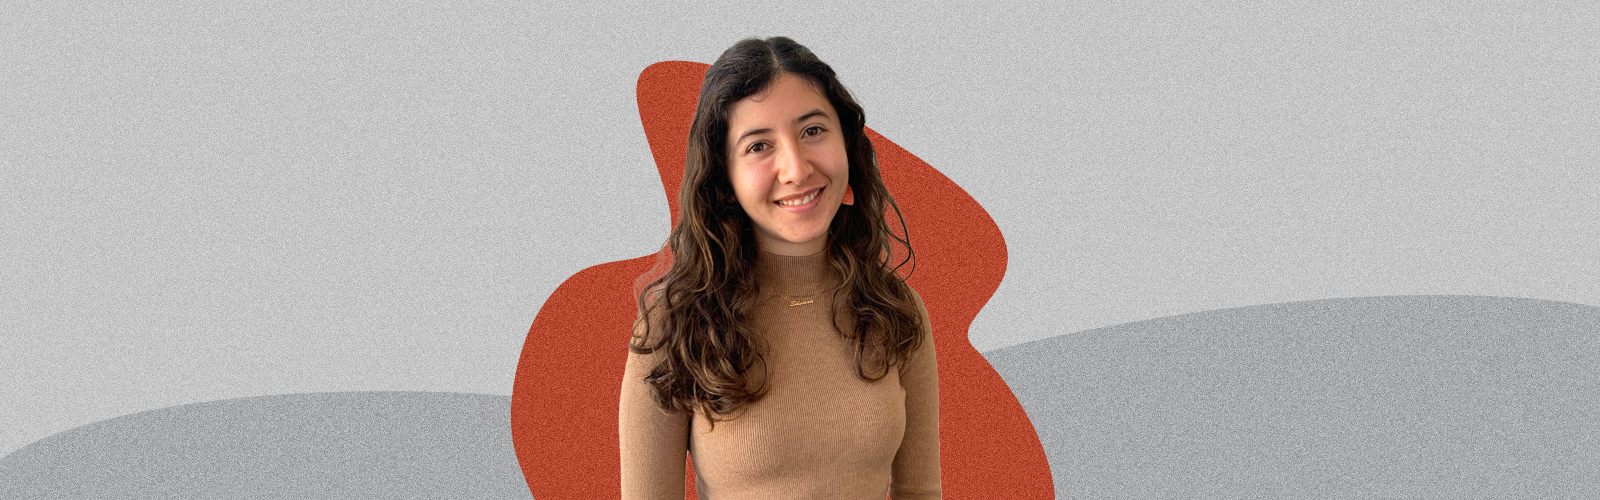 Image of Silvana Martinez against a grey and orange background